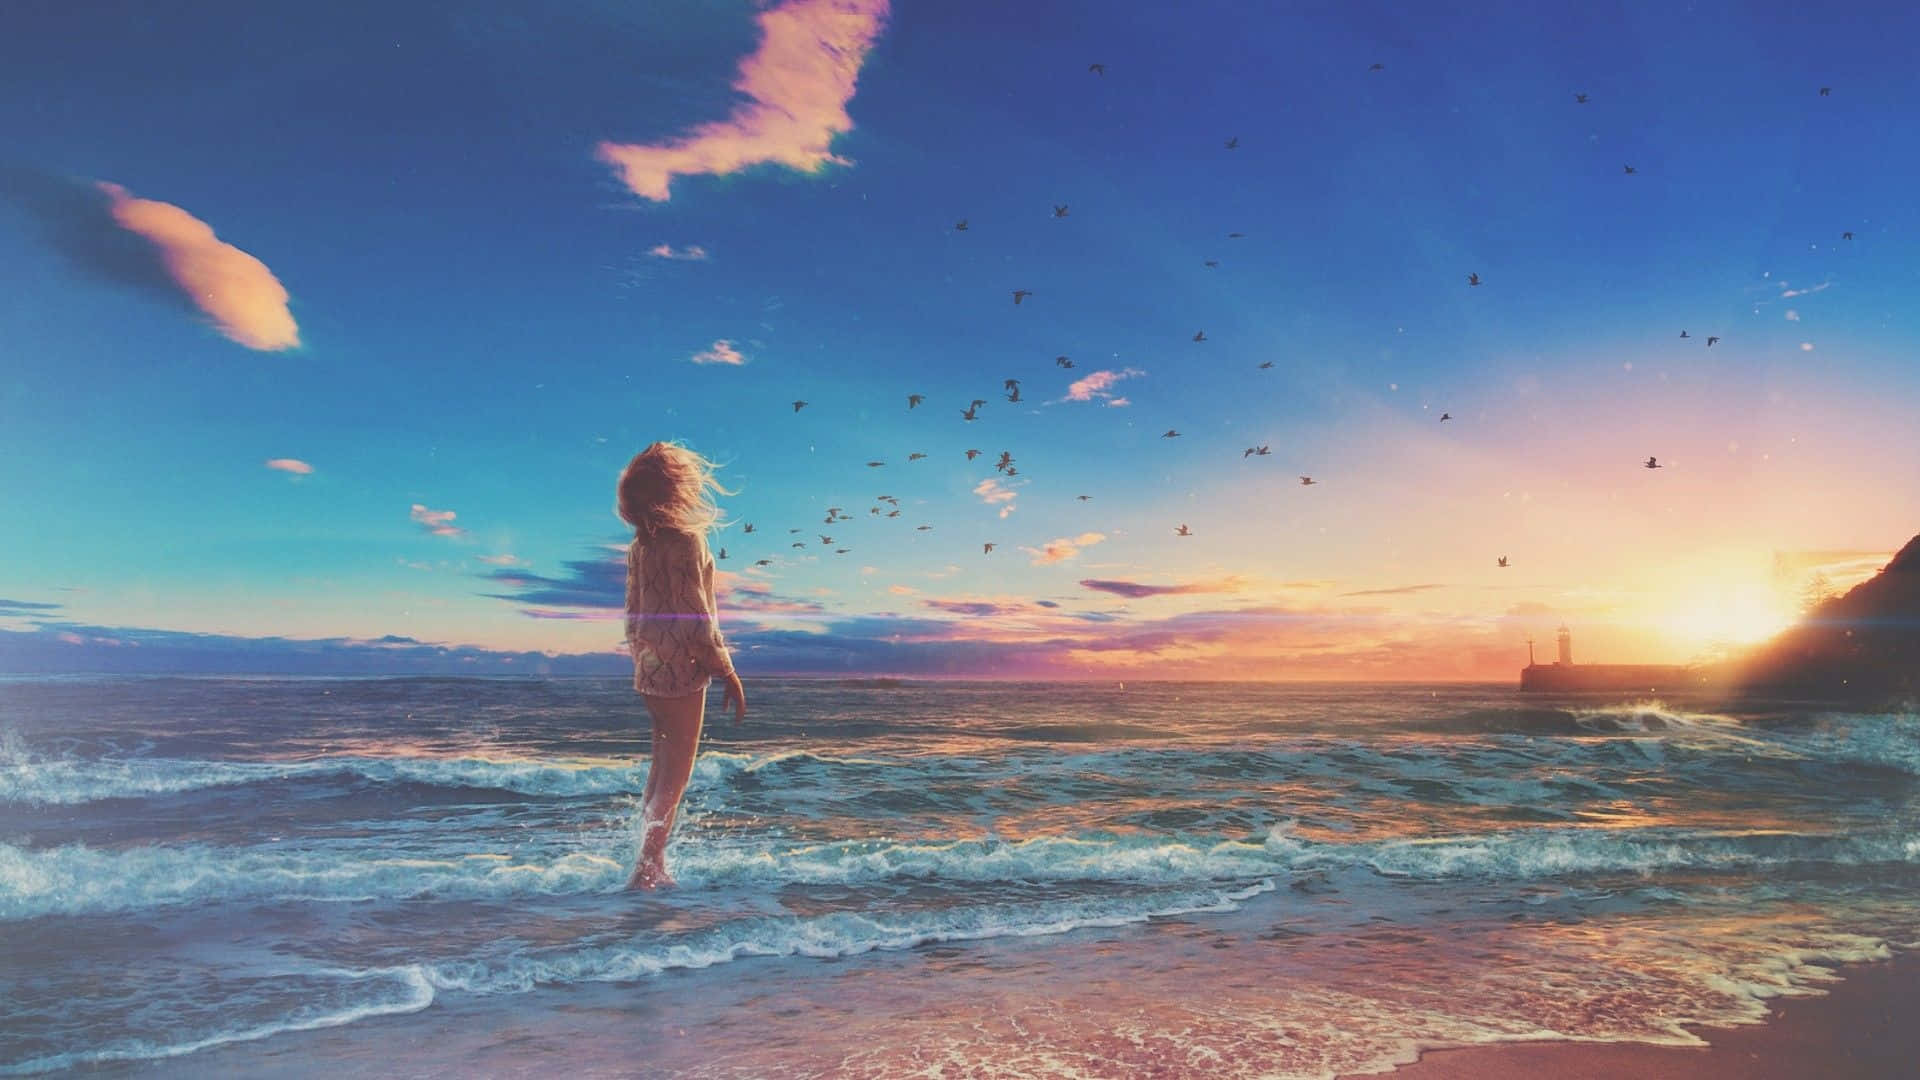 Download Anime Beach Sunset Wallpaper 